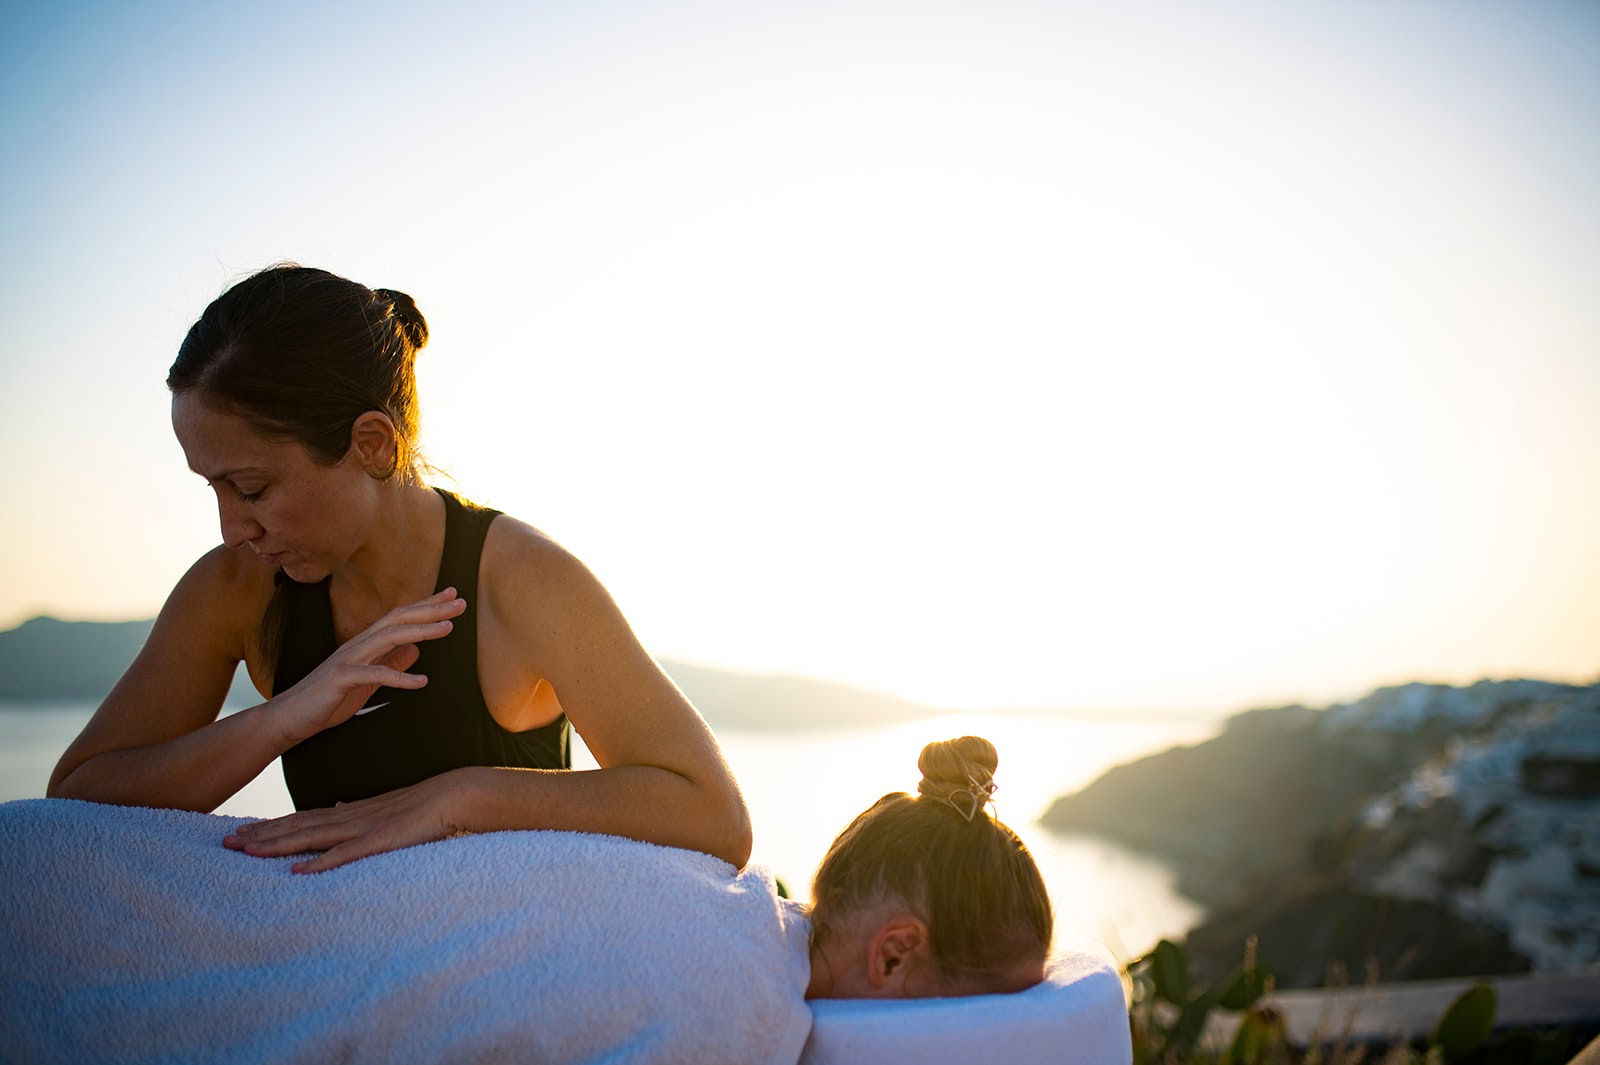 Santorini Mobile Massage: Deep Tissue Massage for Total Relaxation